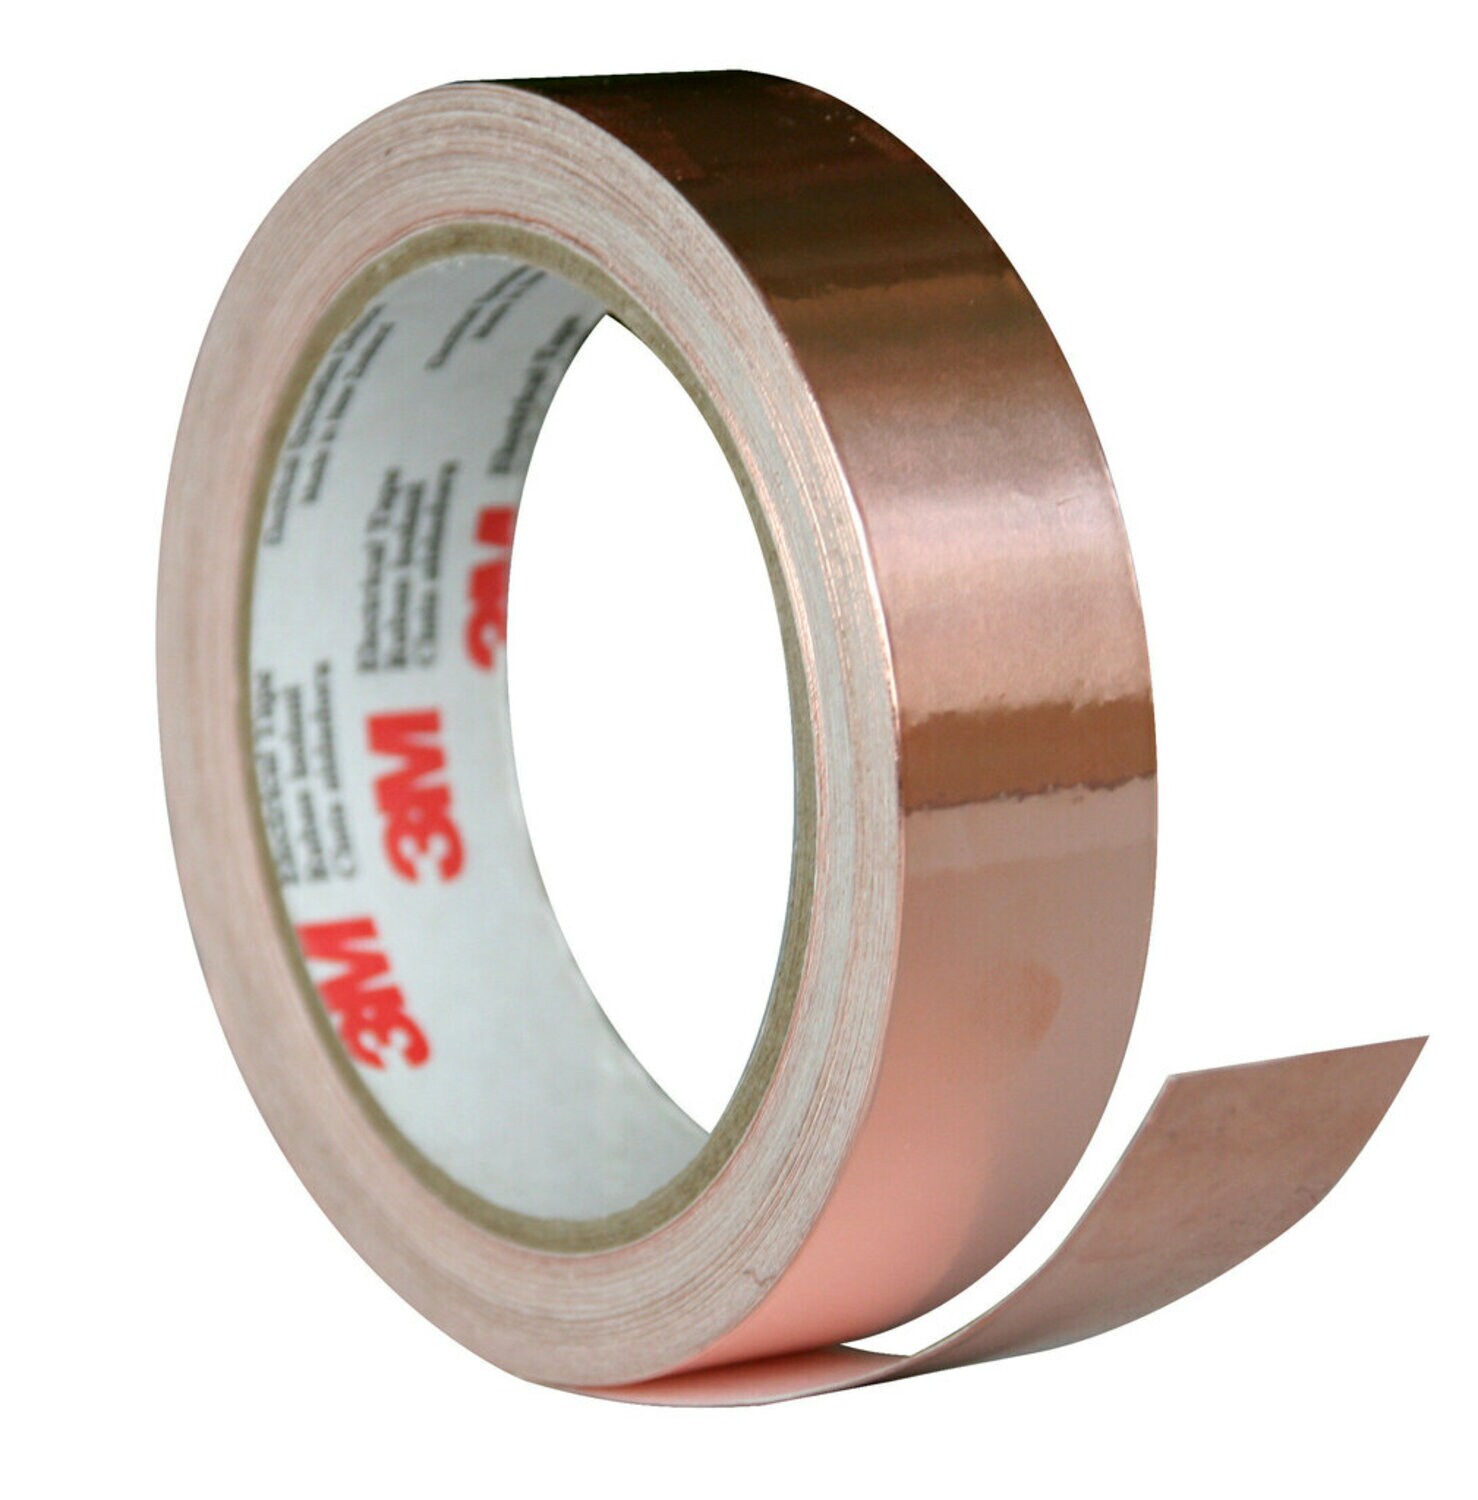 7010348244 - 3M EMI Copper Foil Shielding Tape ECC 1181, 2 3/4 in x 60 yd, Bulk, 4
Rolls/Case